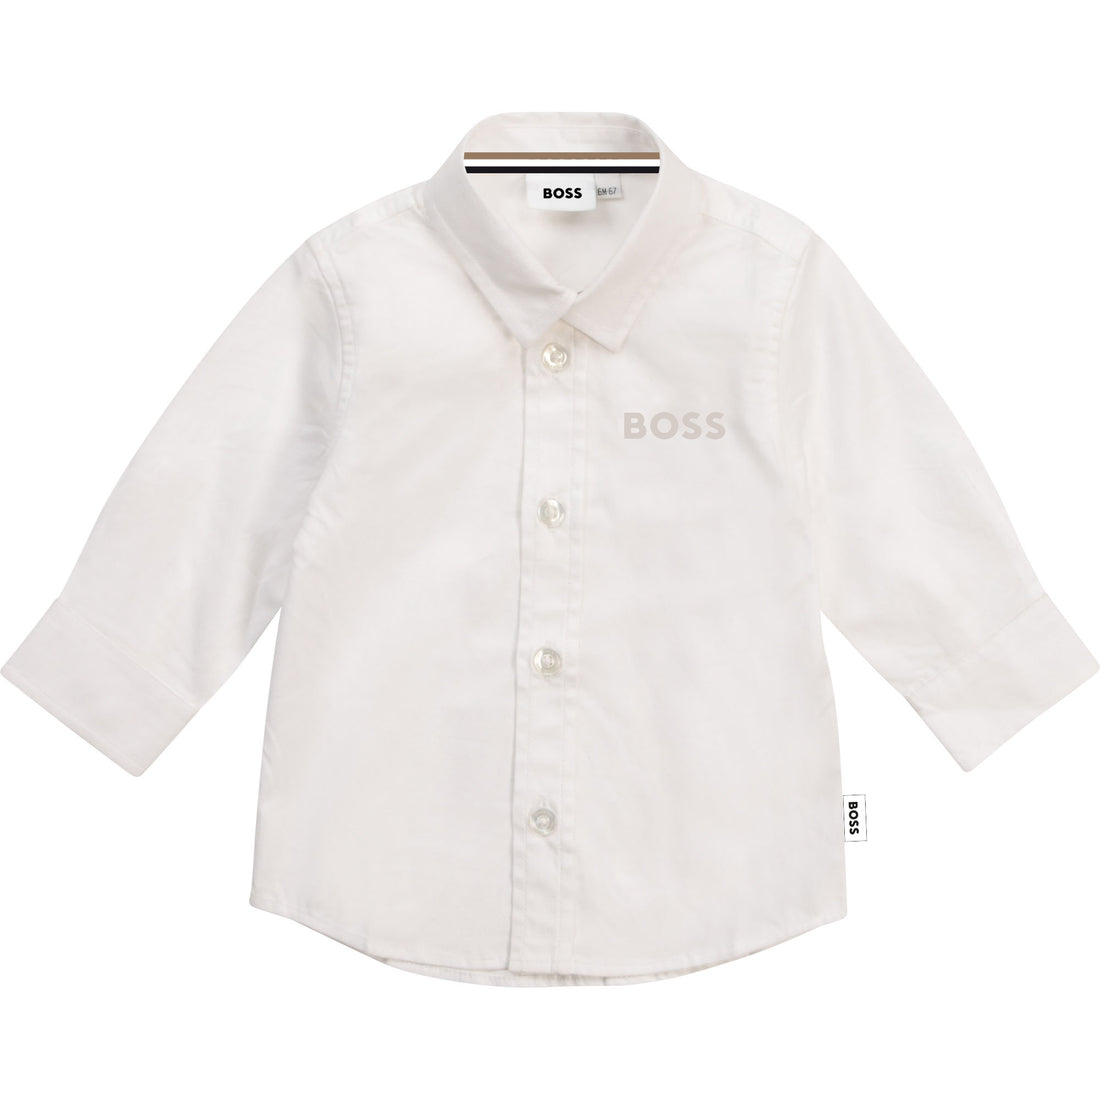 Boss Long Sleeved Shirt Style: J05960